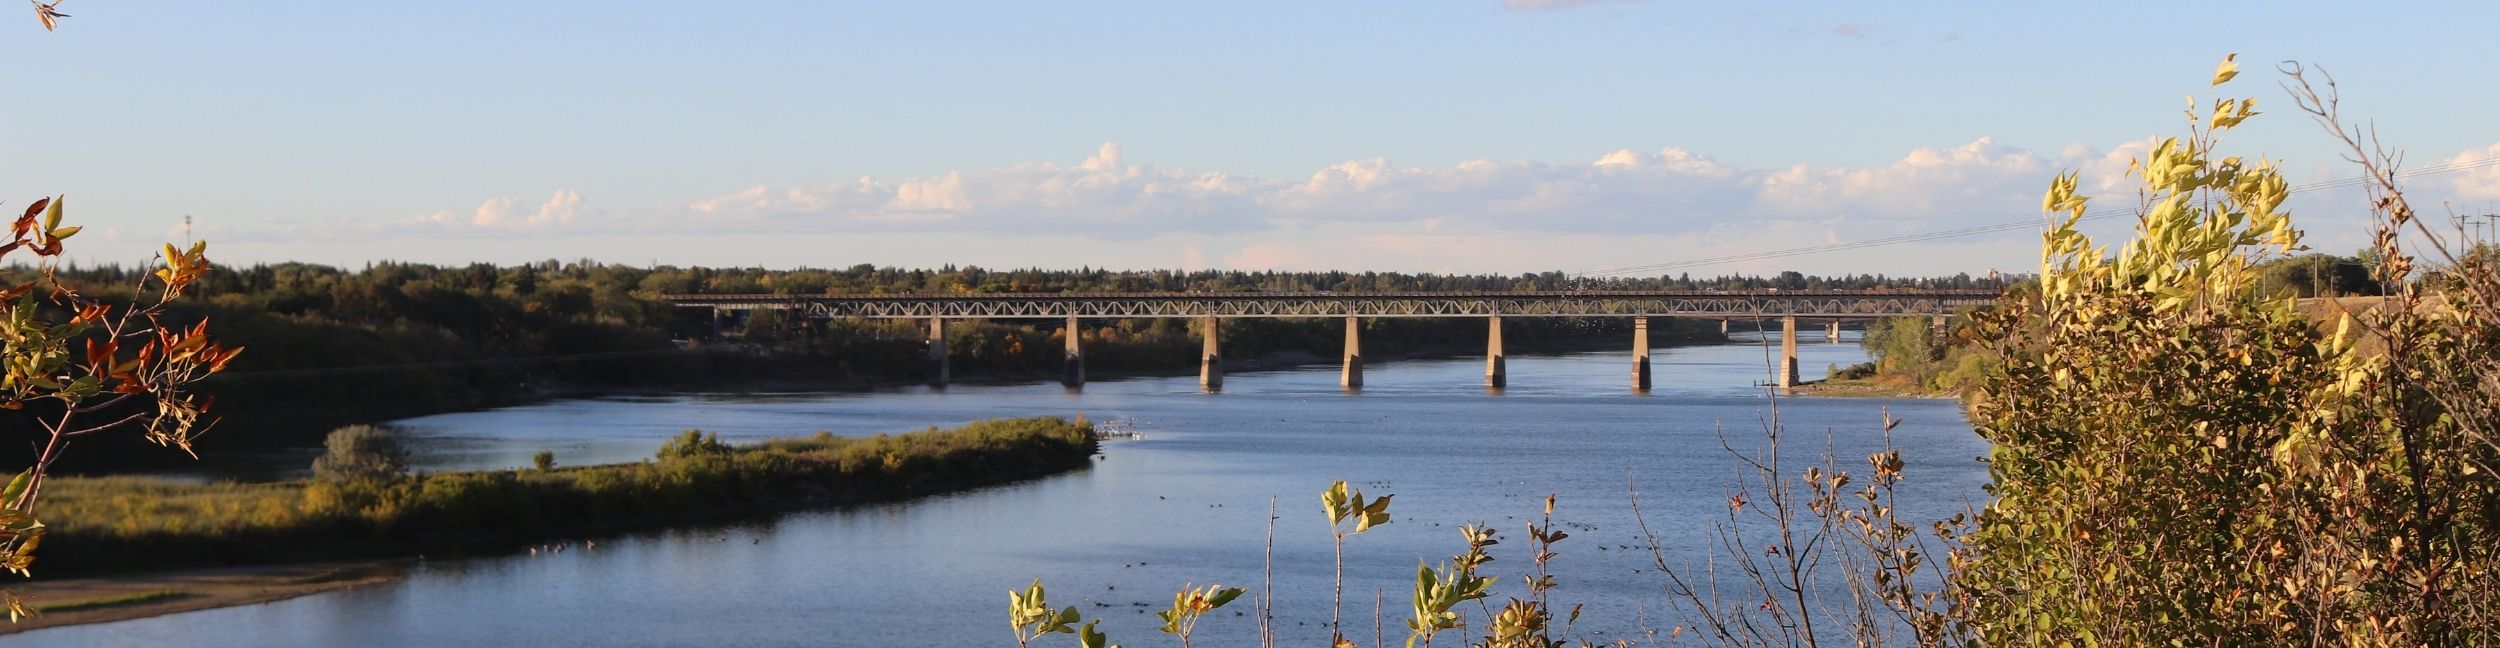 The Train Bridge crosses the South Saskatchewan River Meewasin Saskatoon